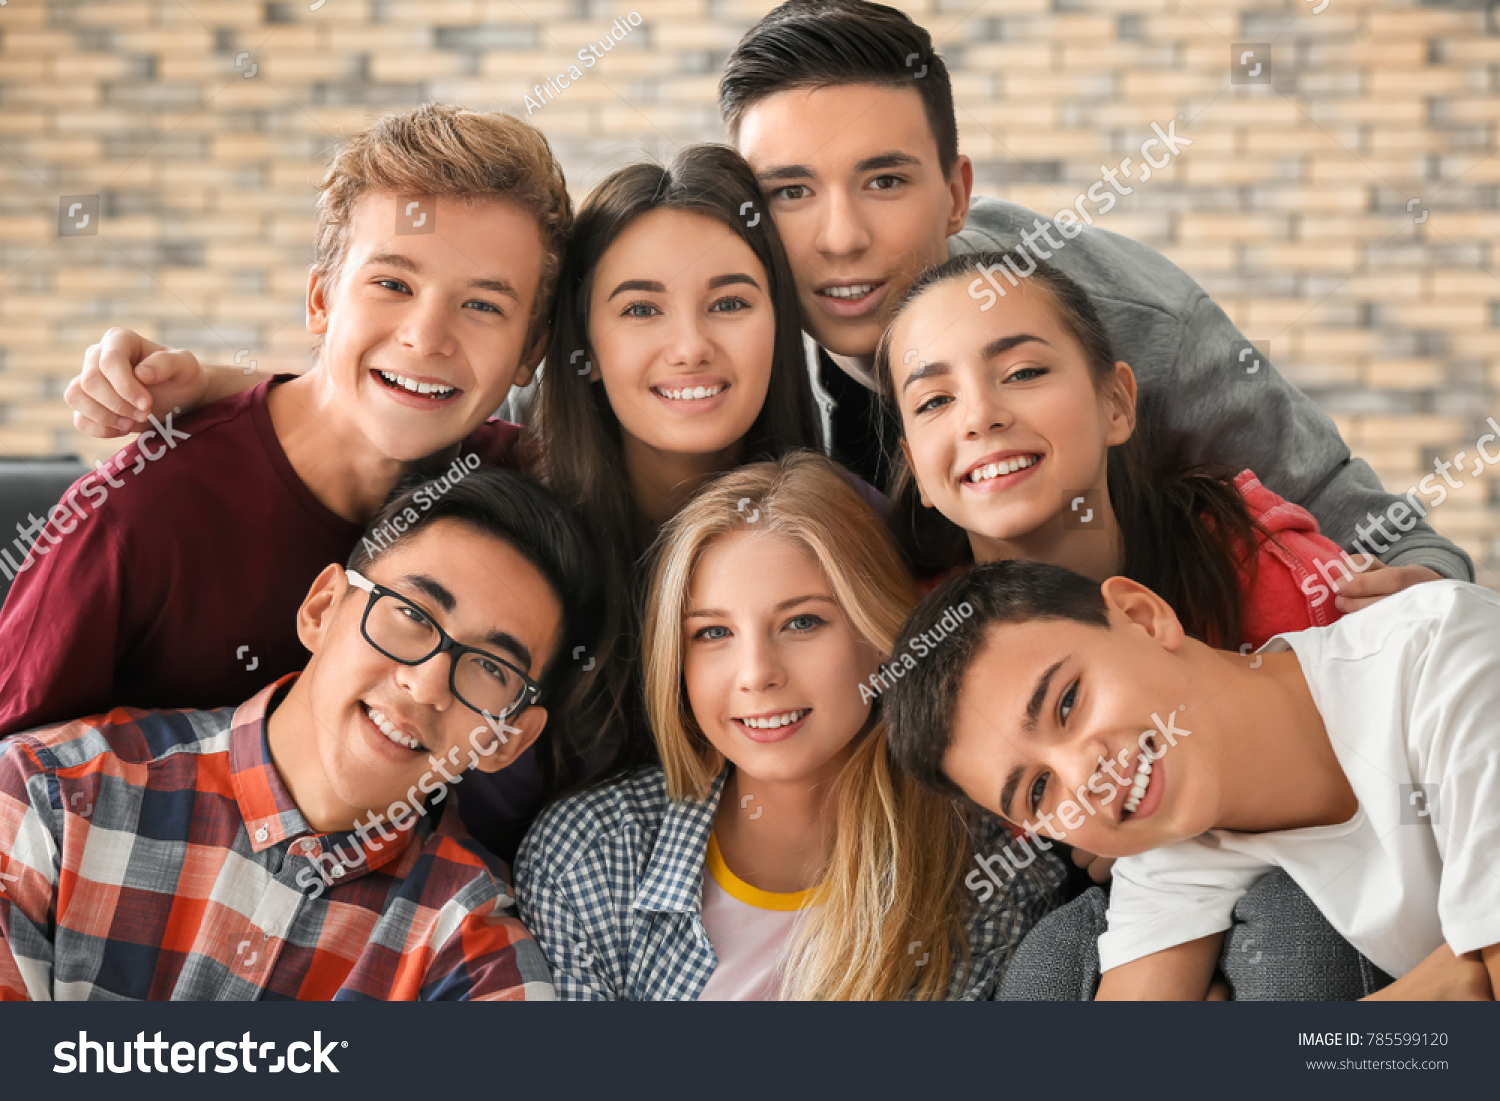 teenagers